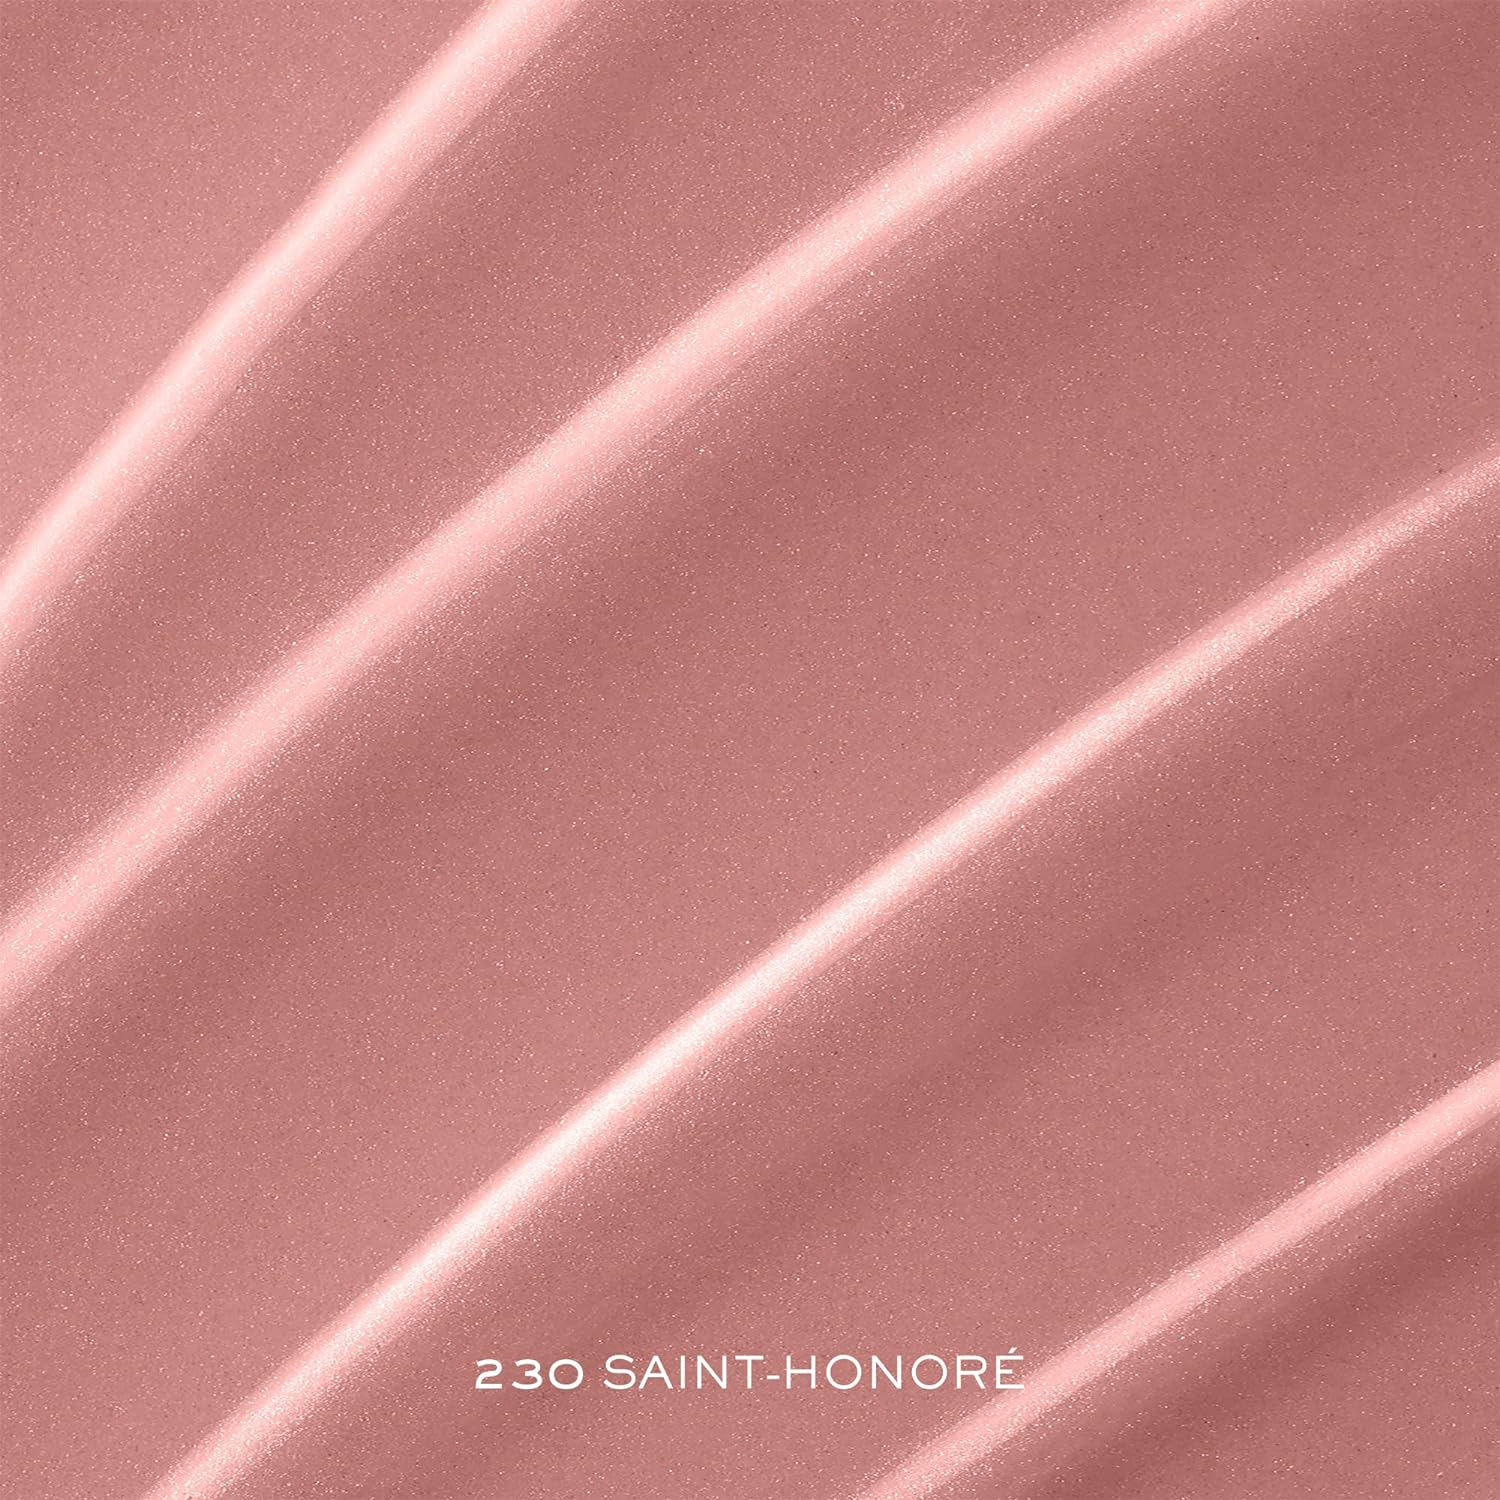 Lancôme L'Absolu Laquer Lip Gloss - Buildable & High Shine Finish - Lightweight & Long-Wear - 230 Saint-Honoré (Sheer) : Beauty & Personal Care